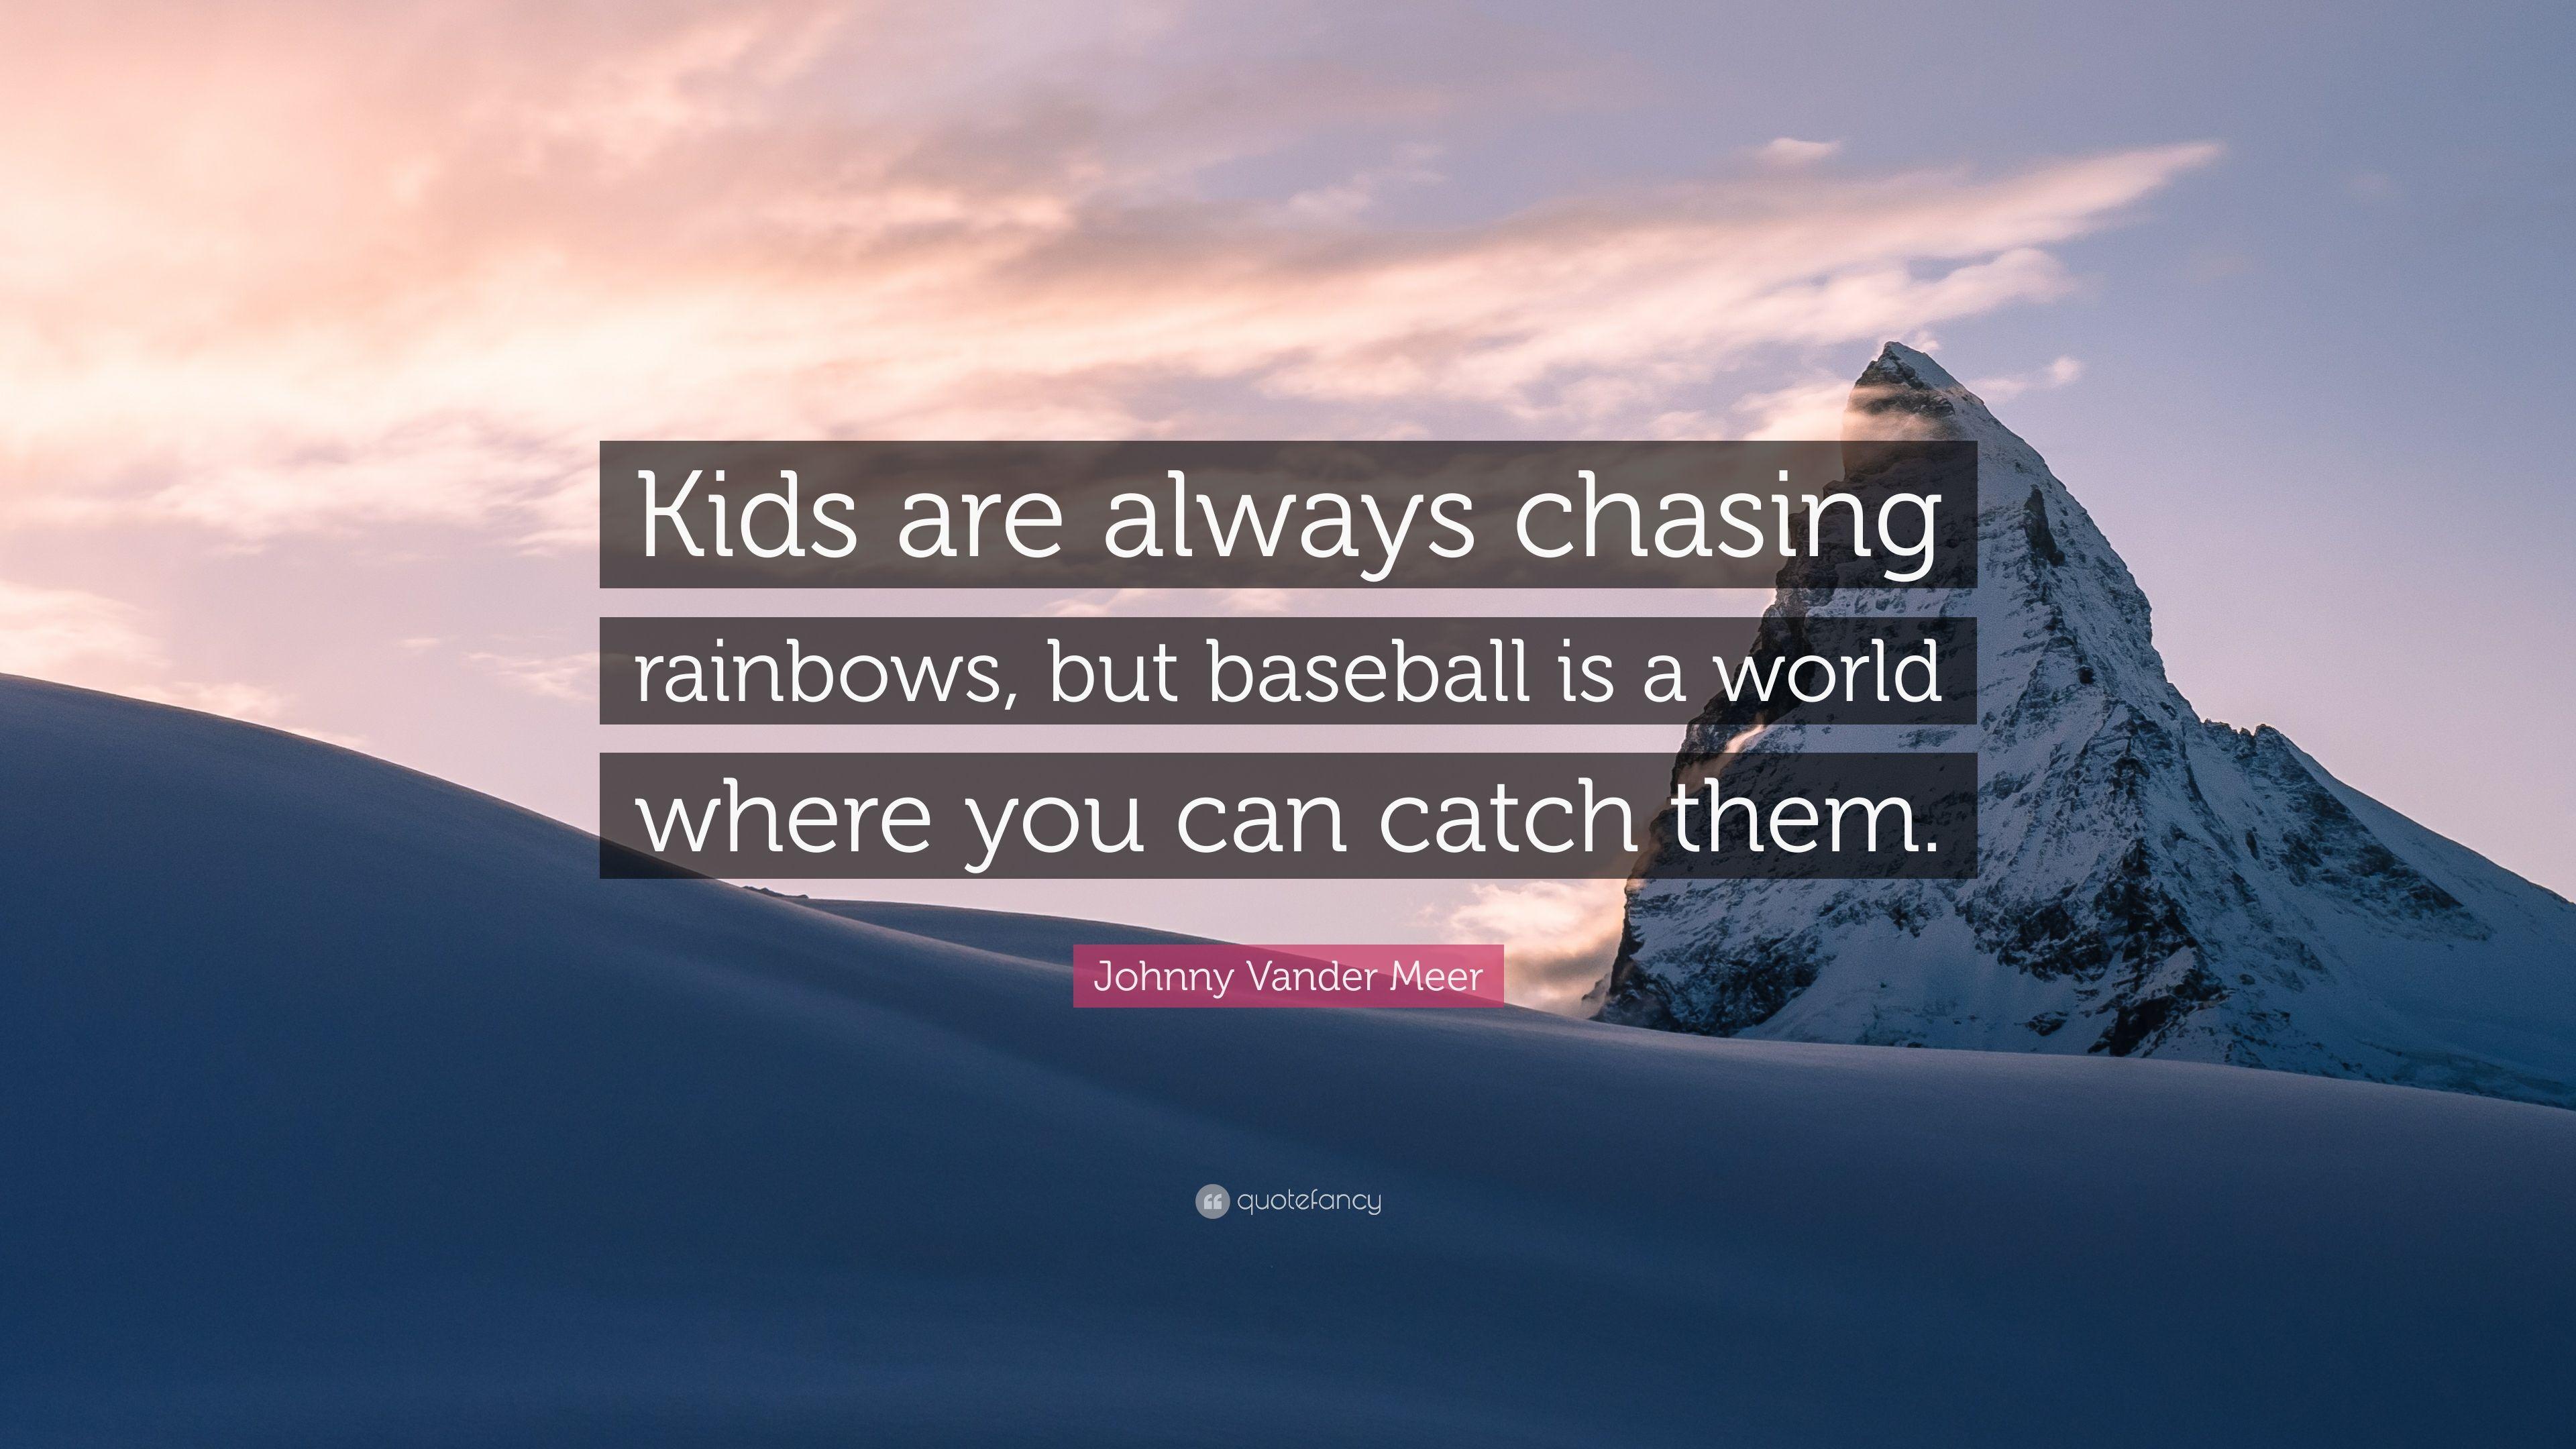 Johnny Vander Meer Quote: “Kids are always chasing rainbows, but